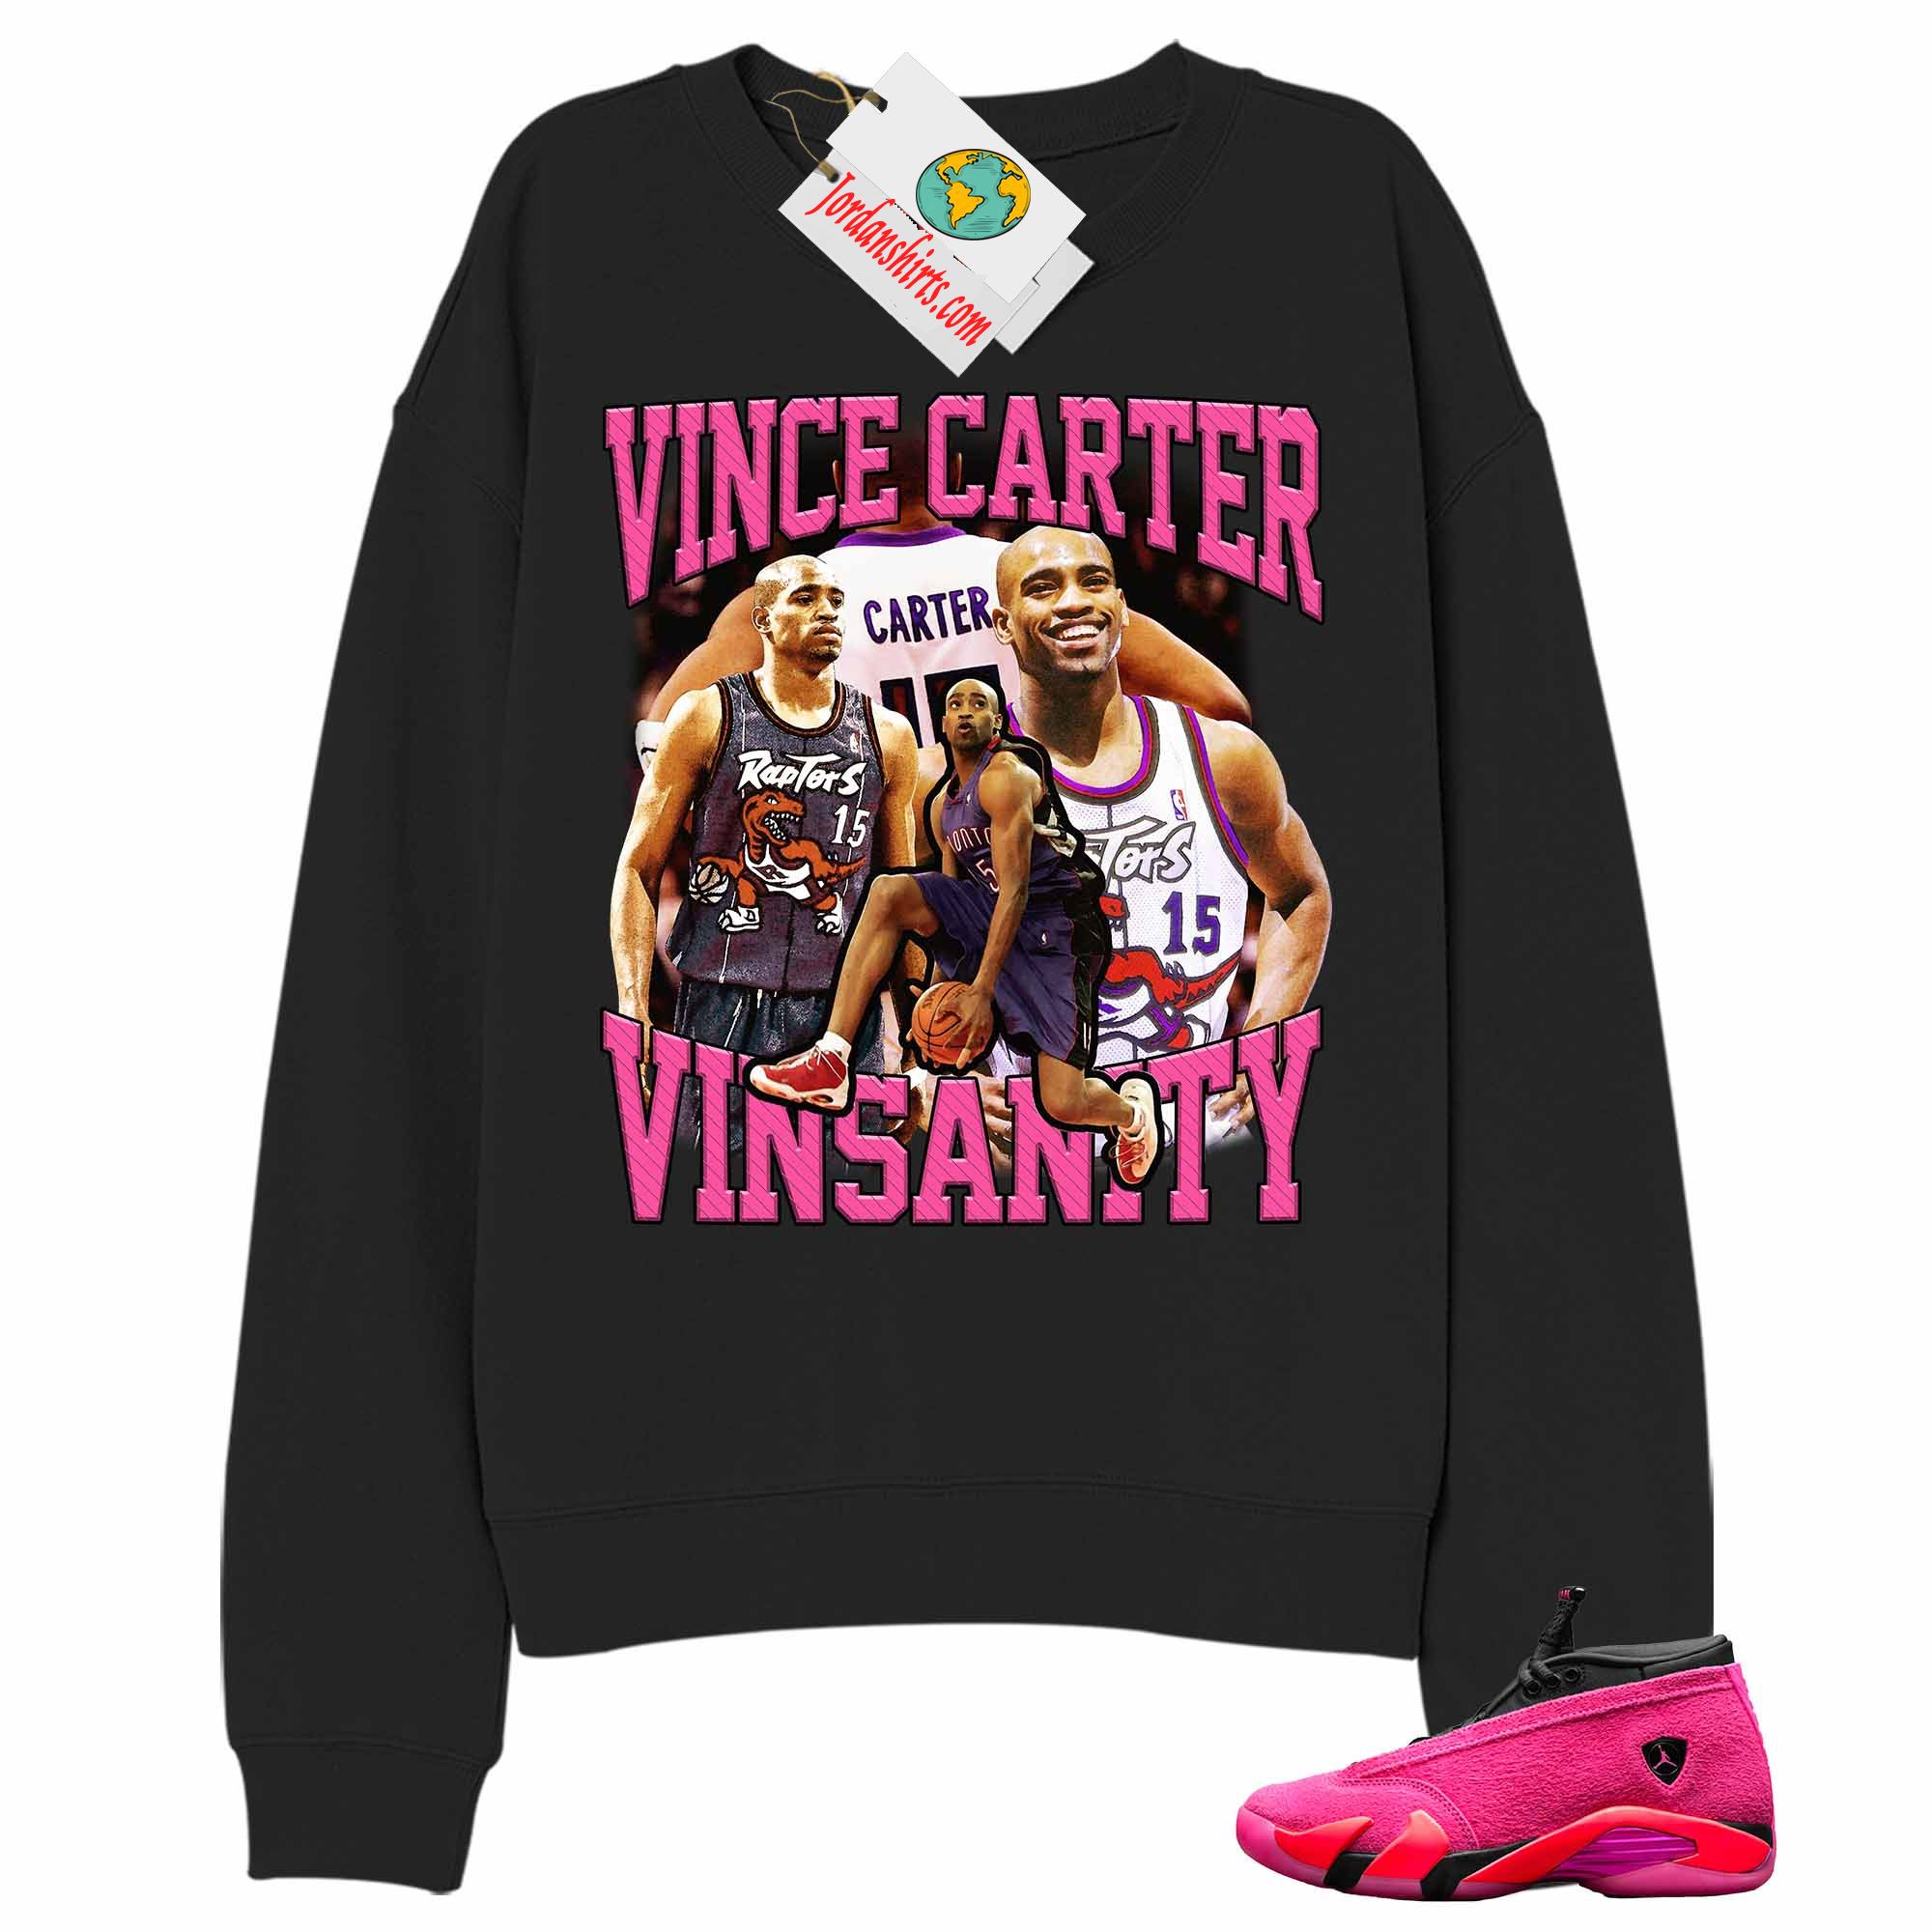 Jordan 14 Sweatshirt, Vince Carter Vinsanity Basketball 90s Retro Vintage Black Sweatshirt Air Jordan 14 Wmns Shocking Pink 14s Full Size Up To 5xl